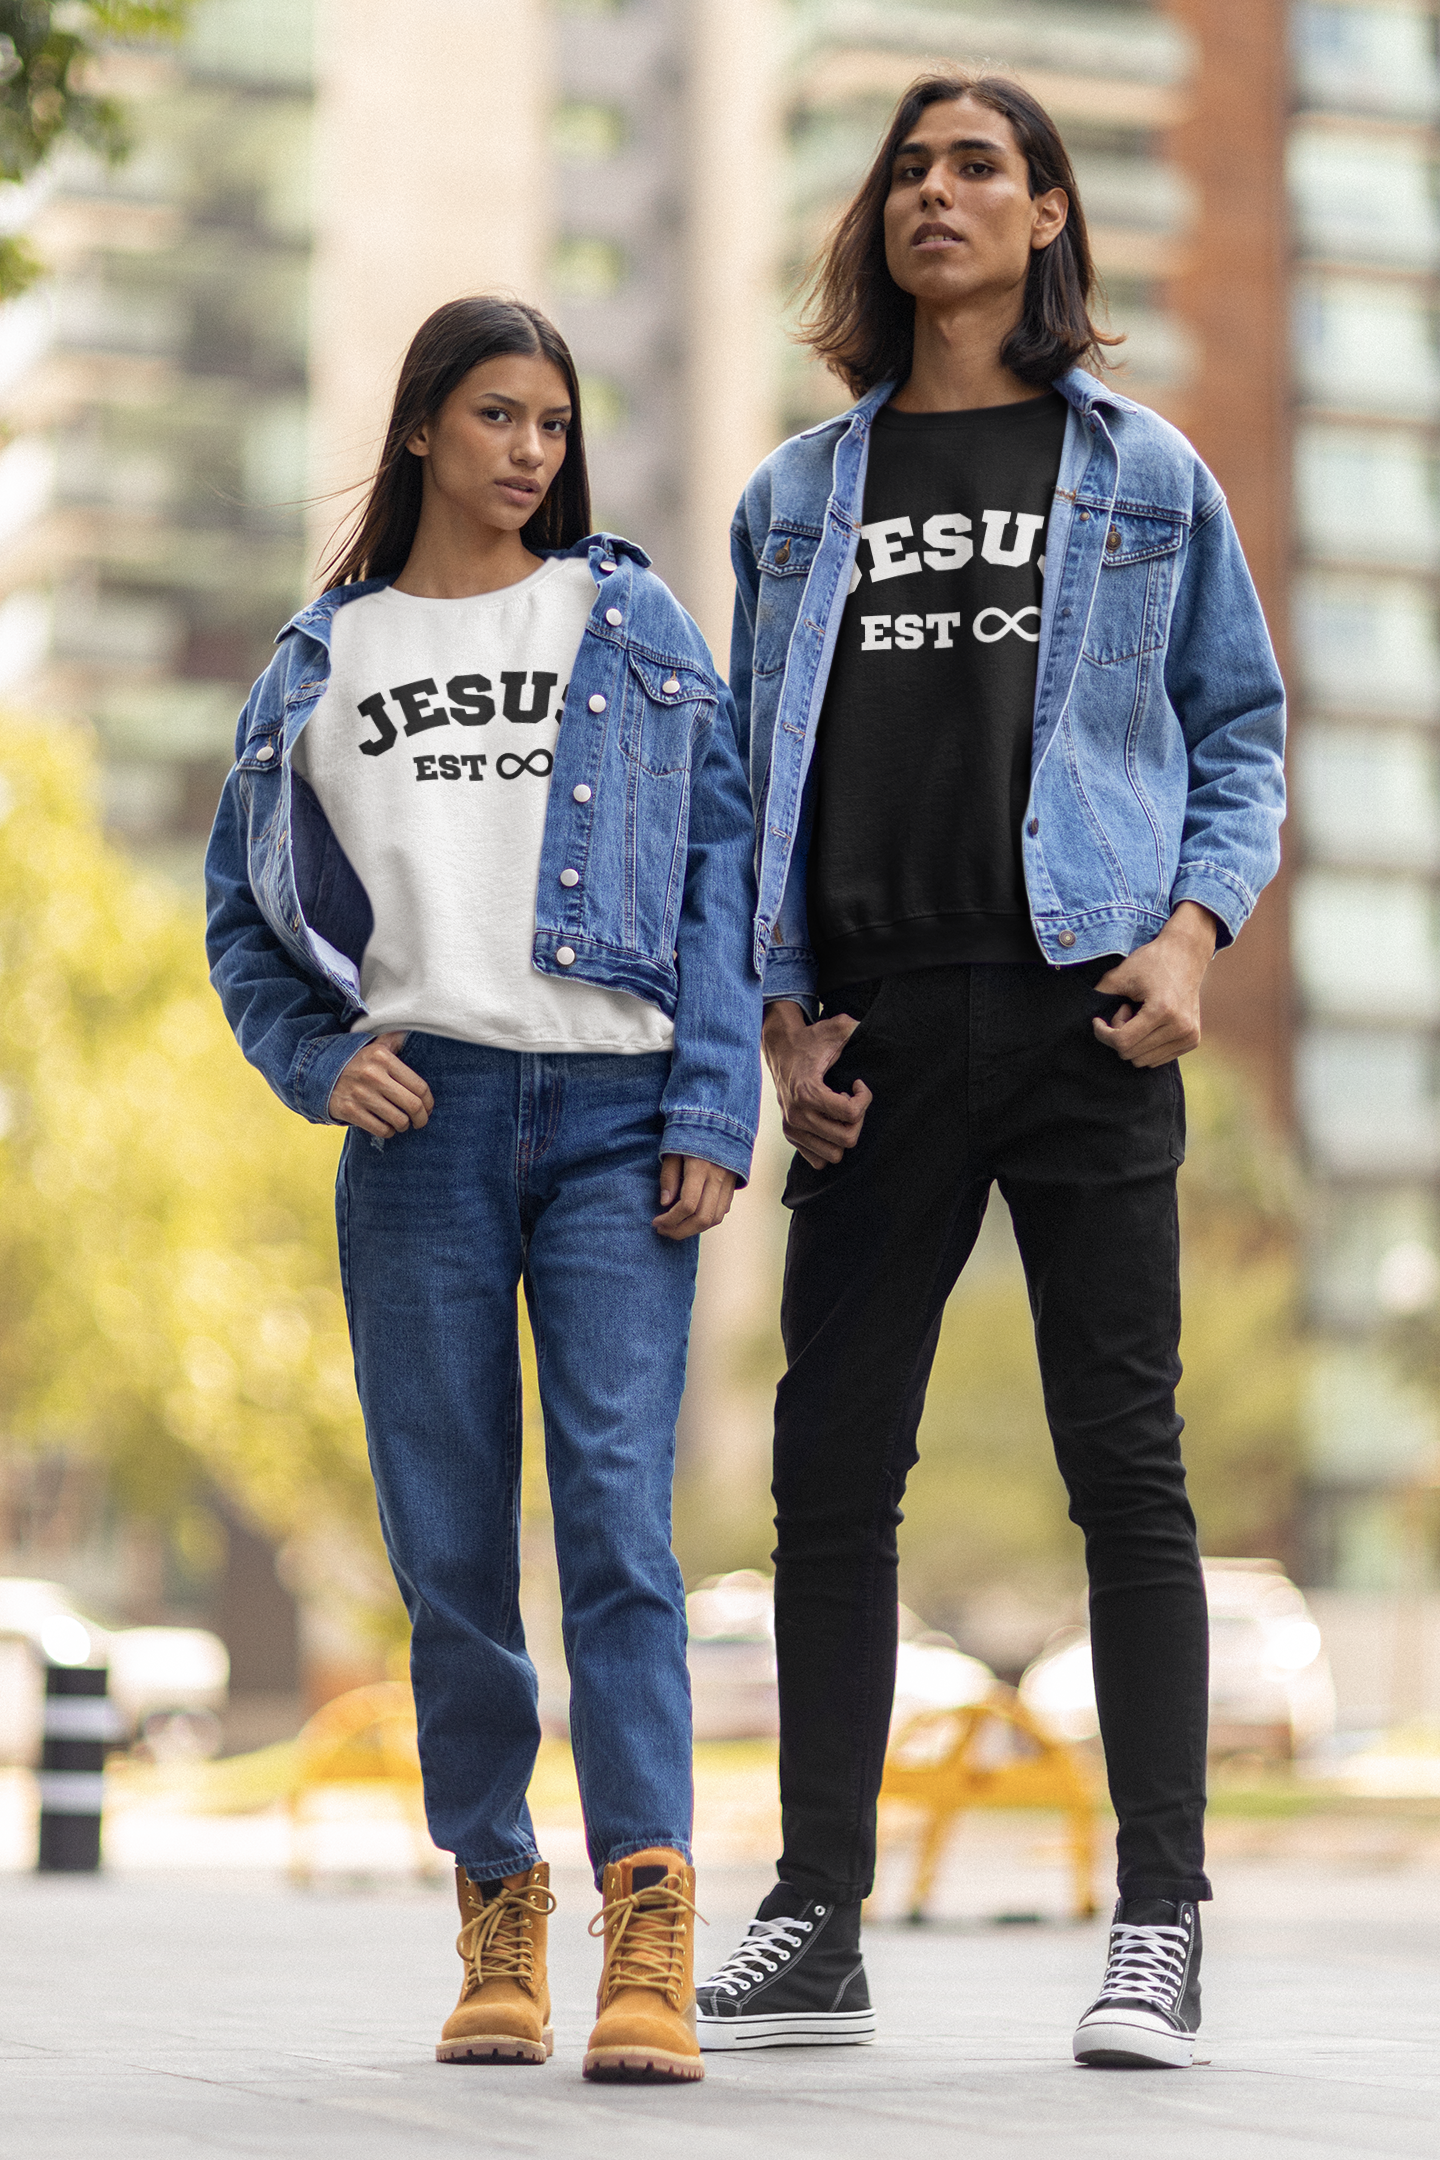 Unisex Christian Jesus Sweatshirts black and white